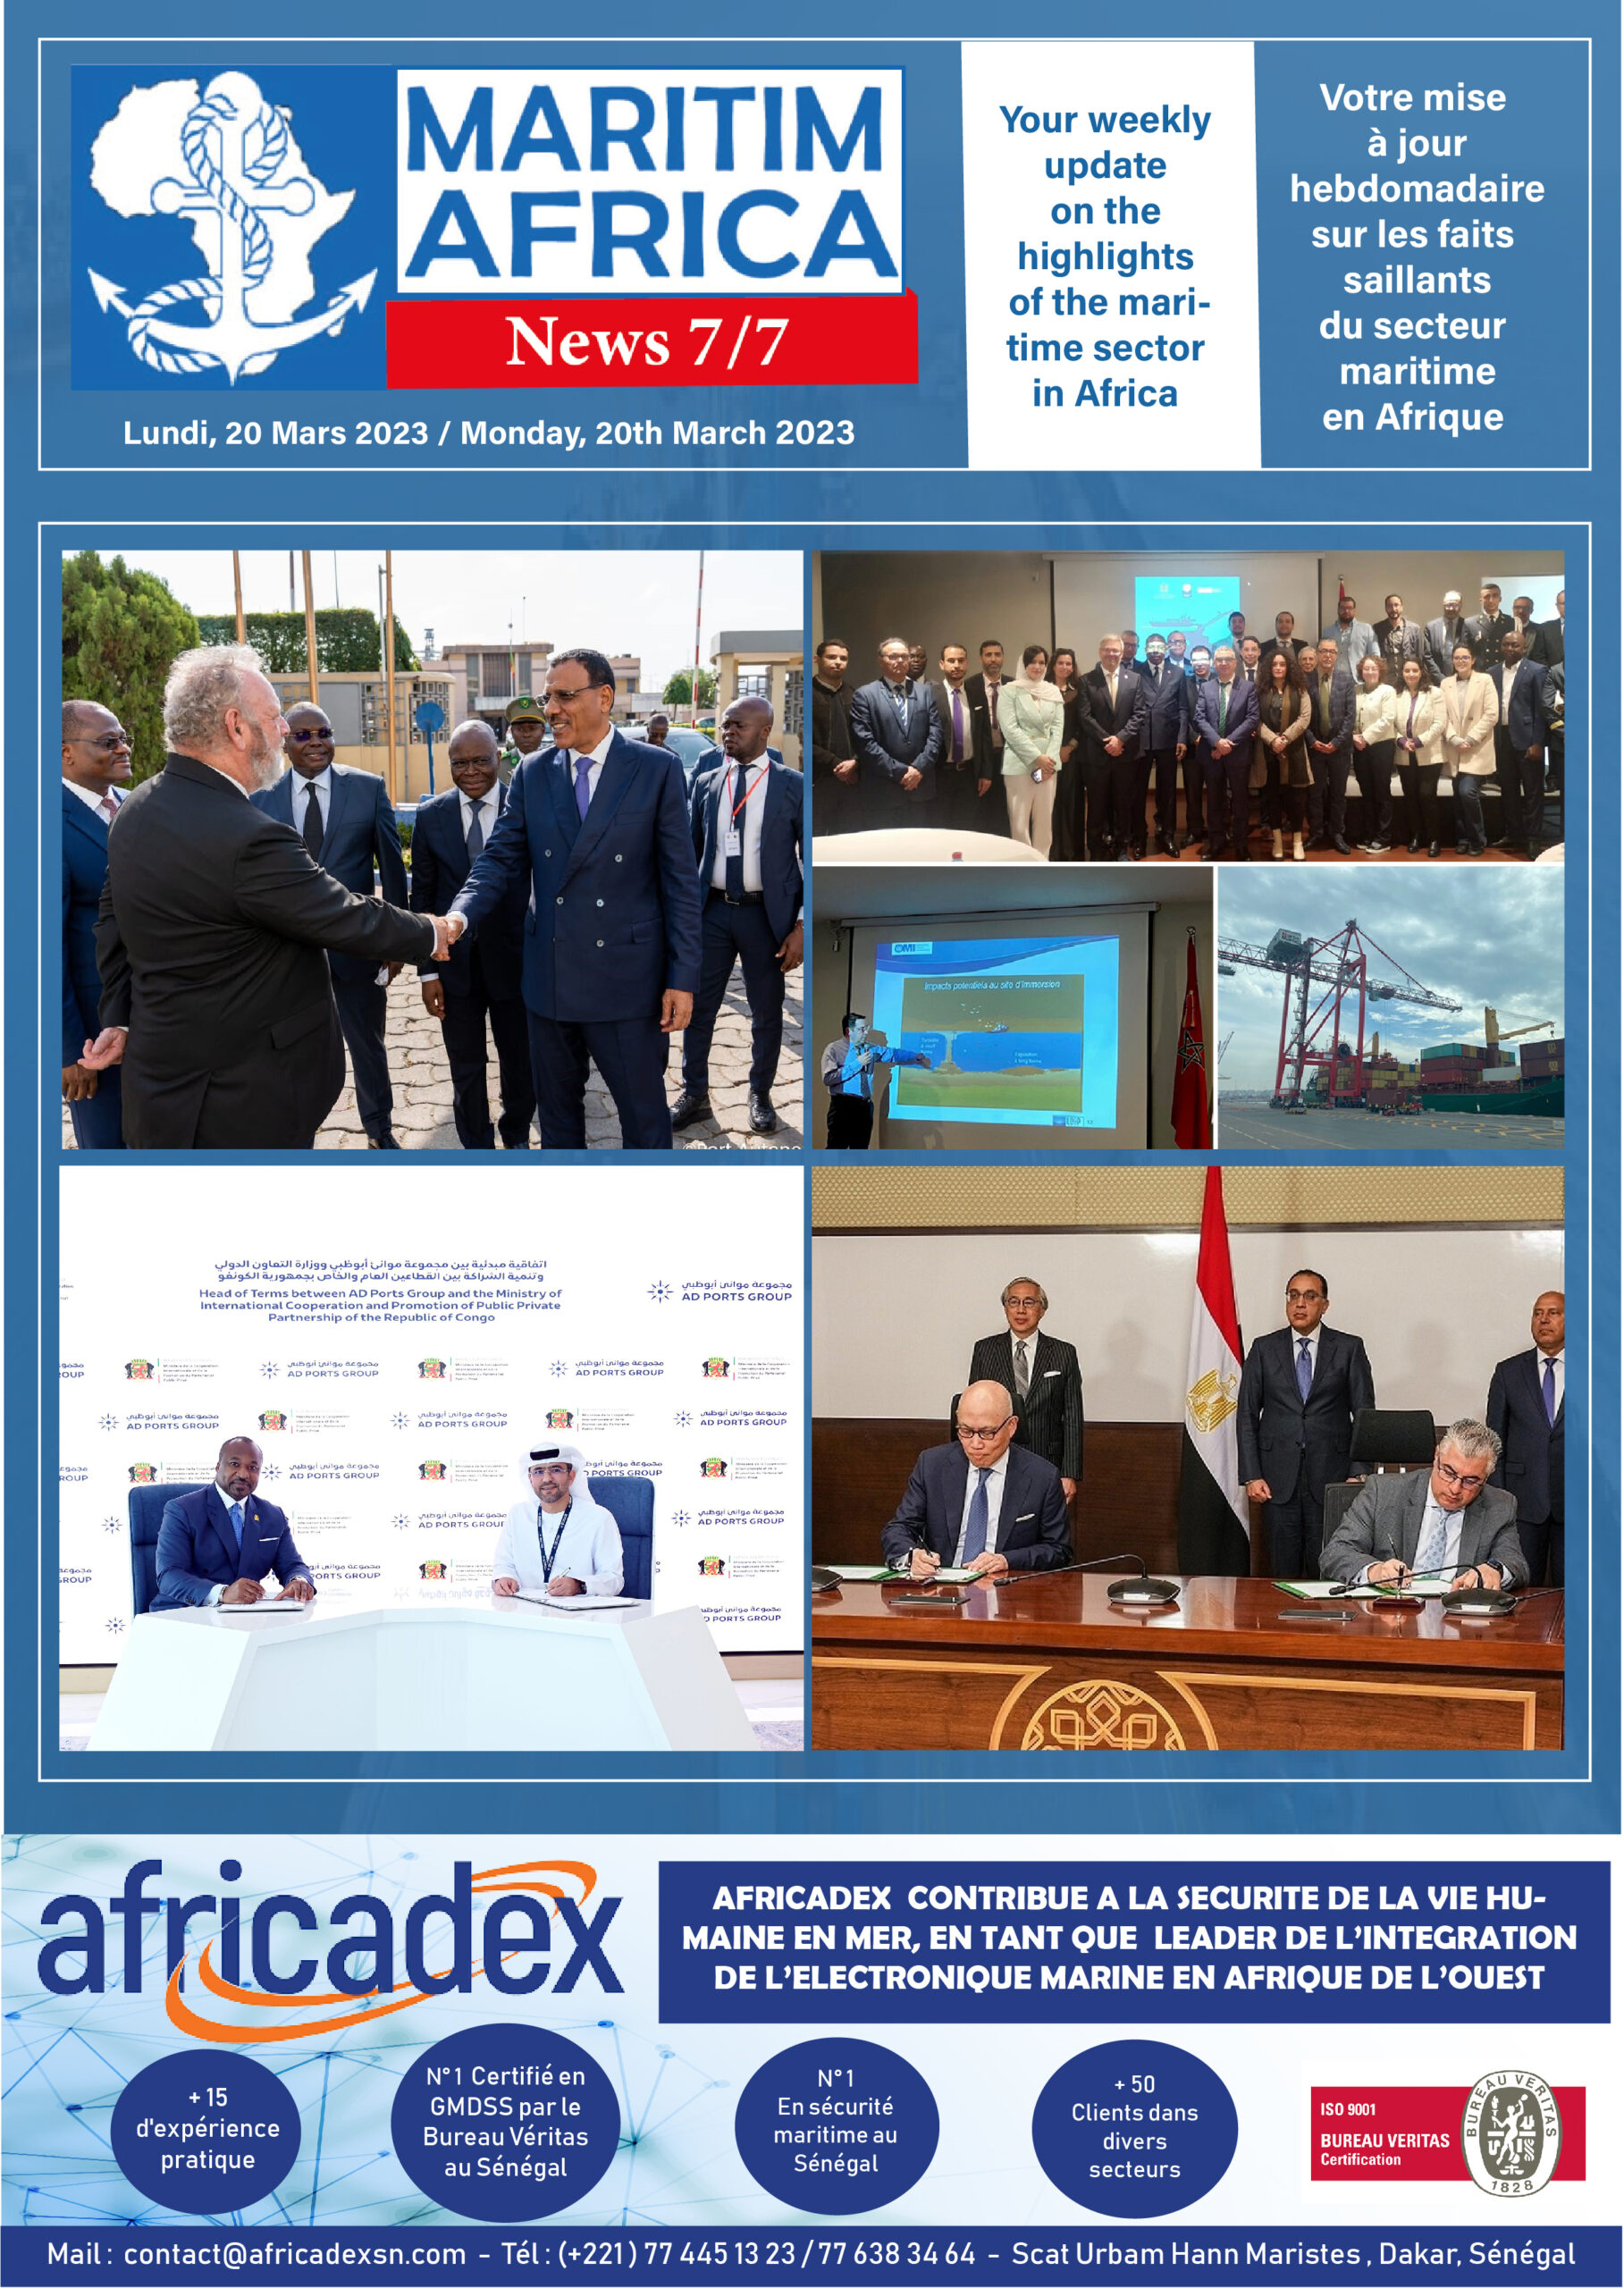 Maritimafrica News 7/7 (Semaine du 13 au 19 mars 2023)